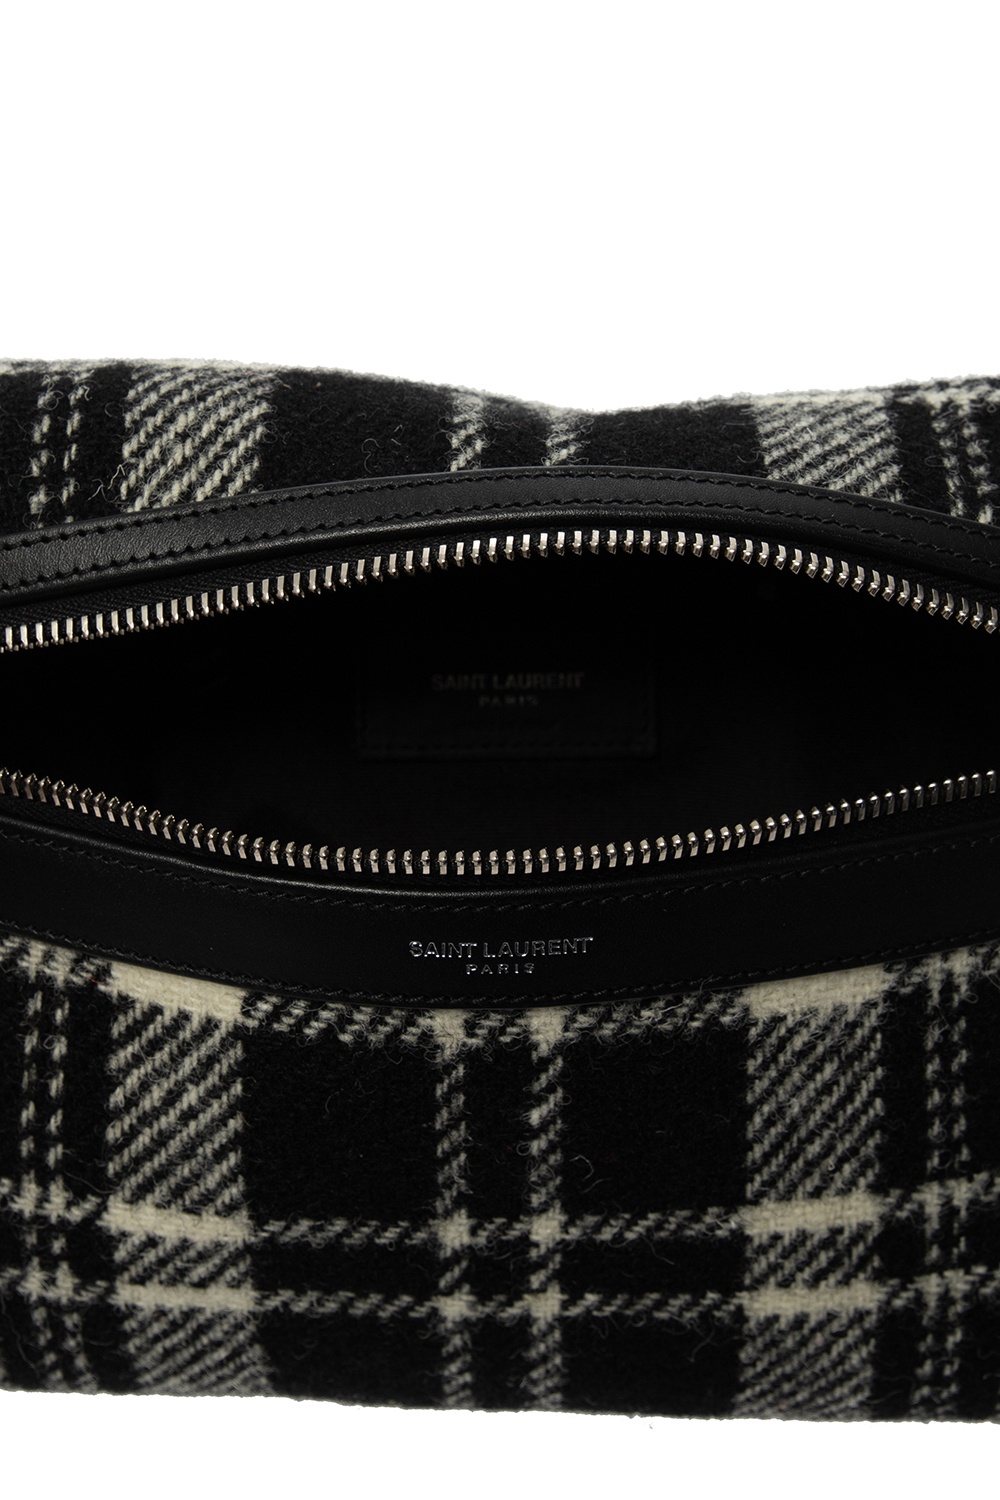 Gwyneth Paltrow Has The First Saint-Laurent Handbag Designed By